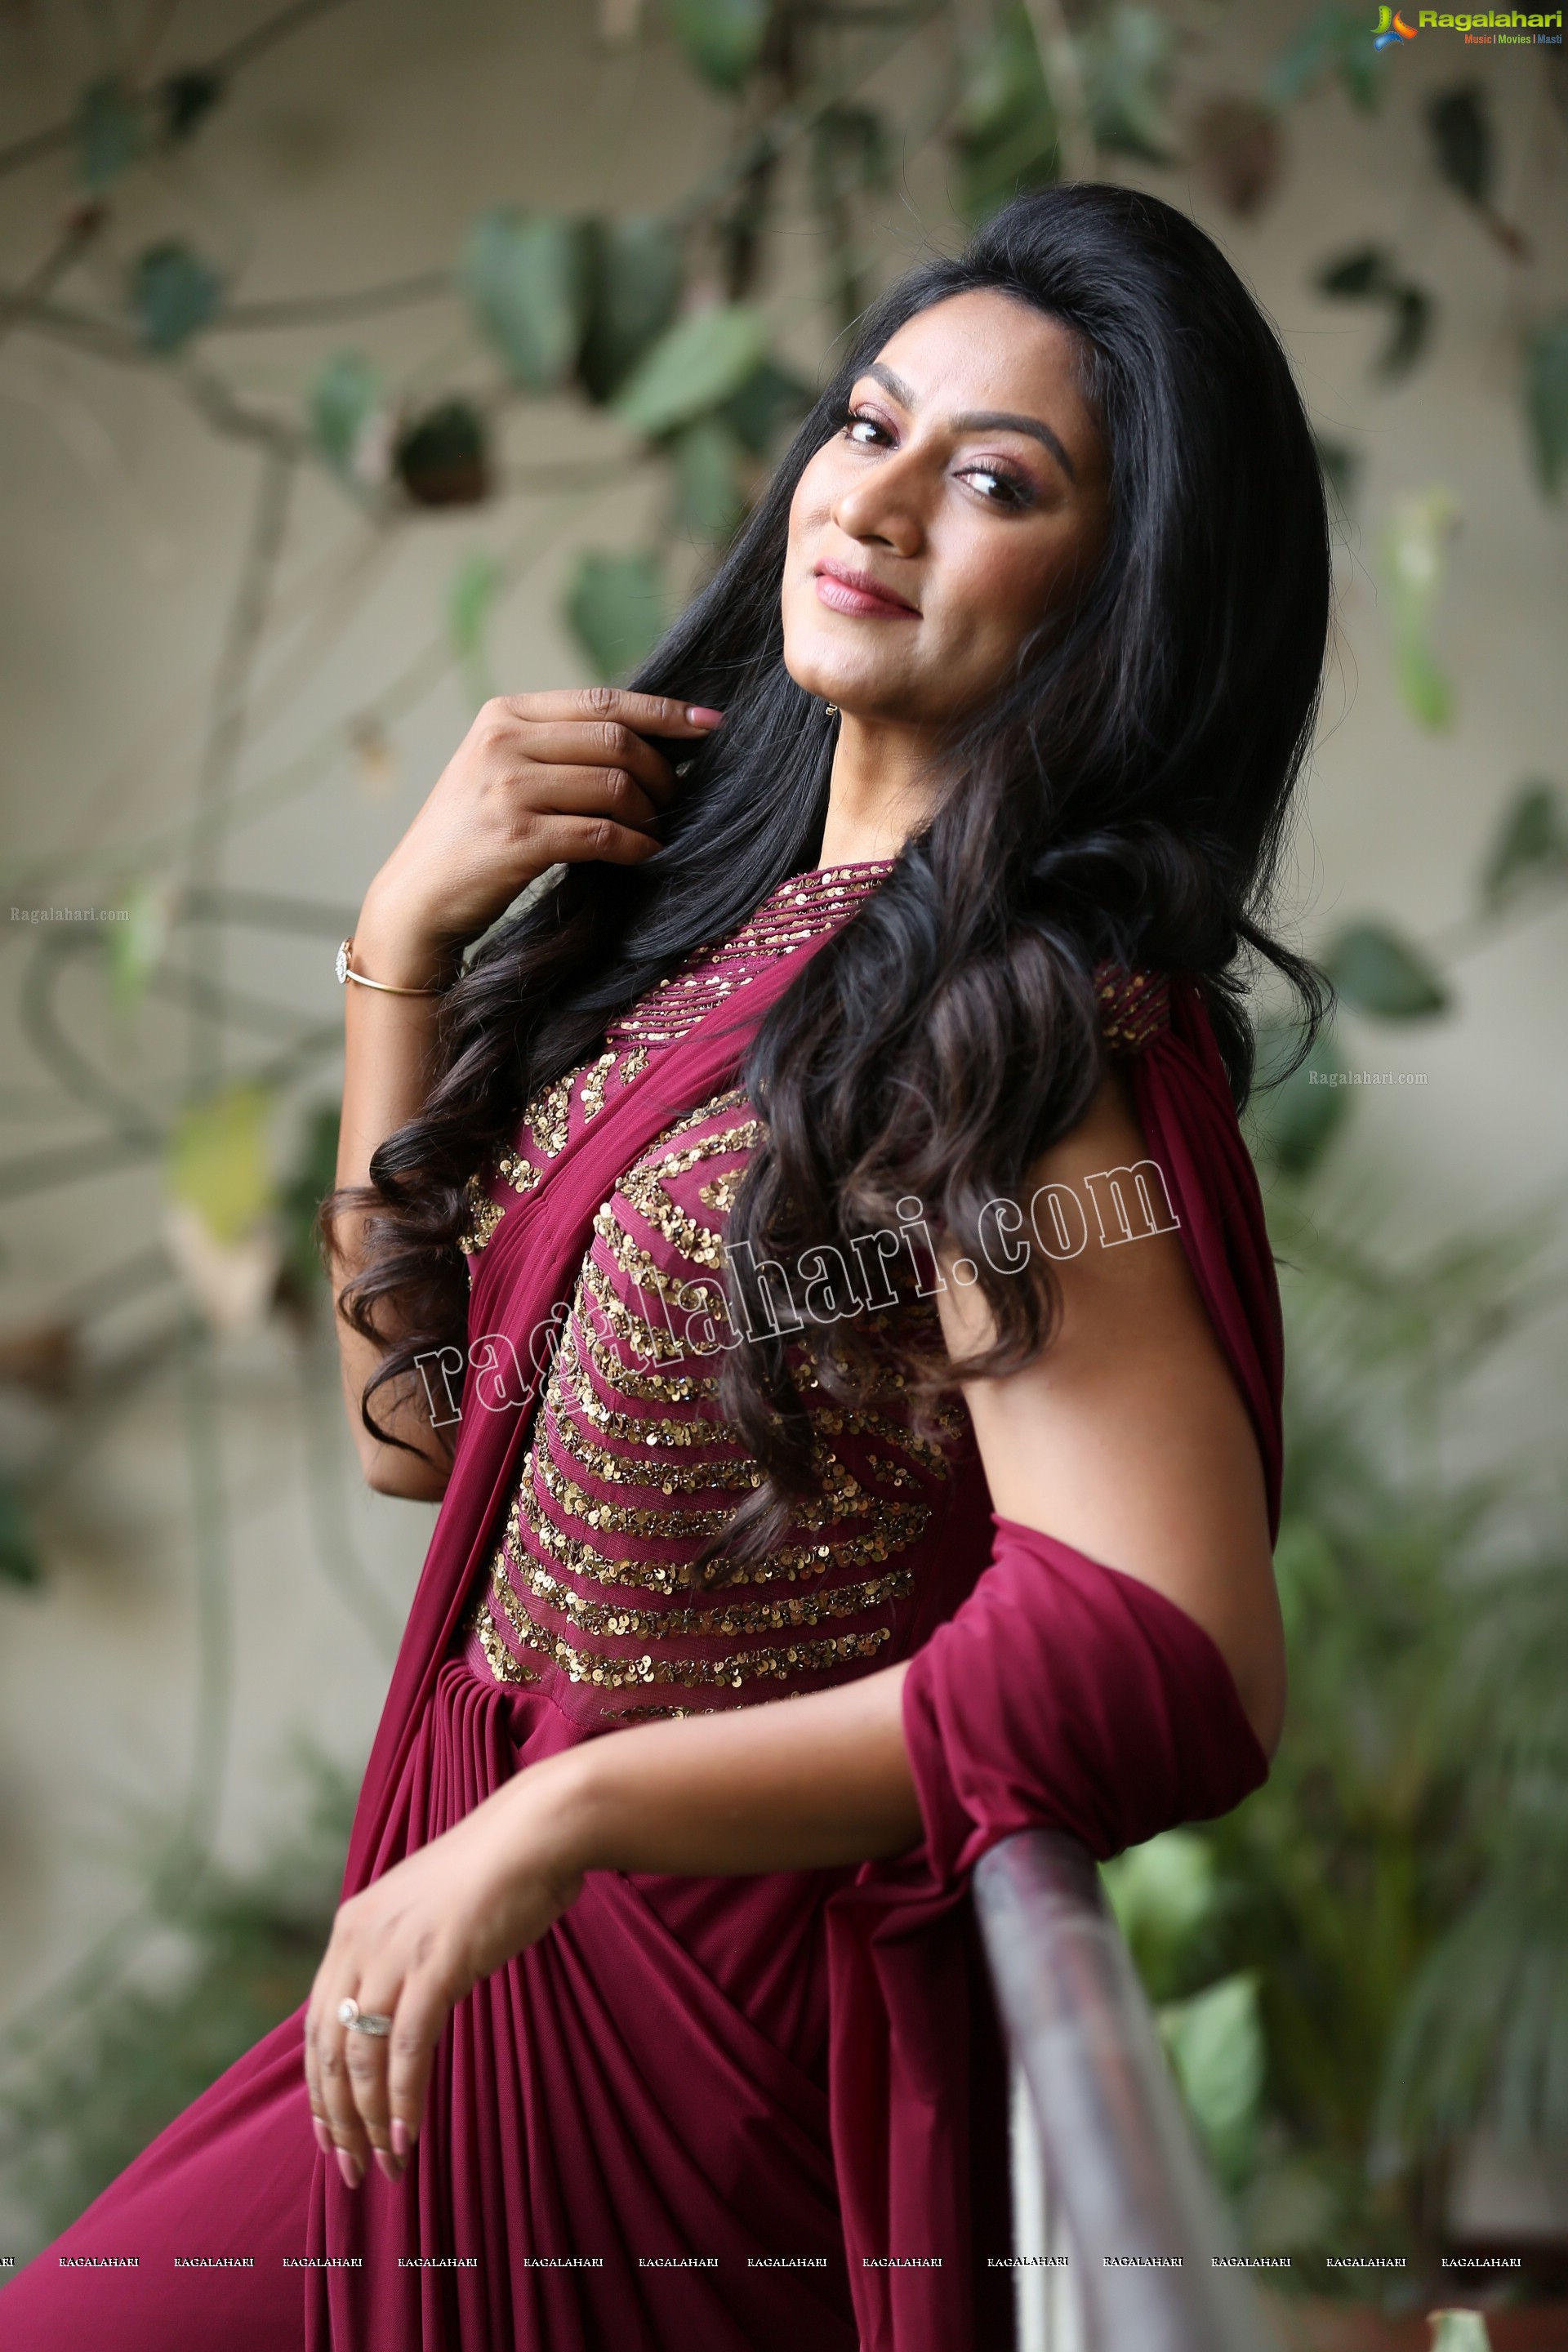 Ashmitha Karnani in Maroon Georgette Saree Exclusive Photo Shoot